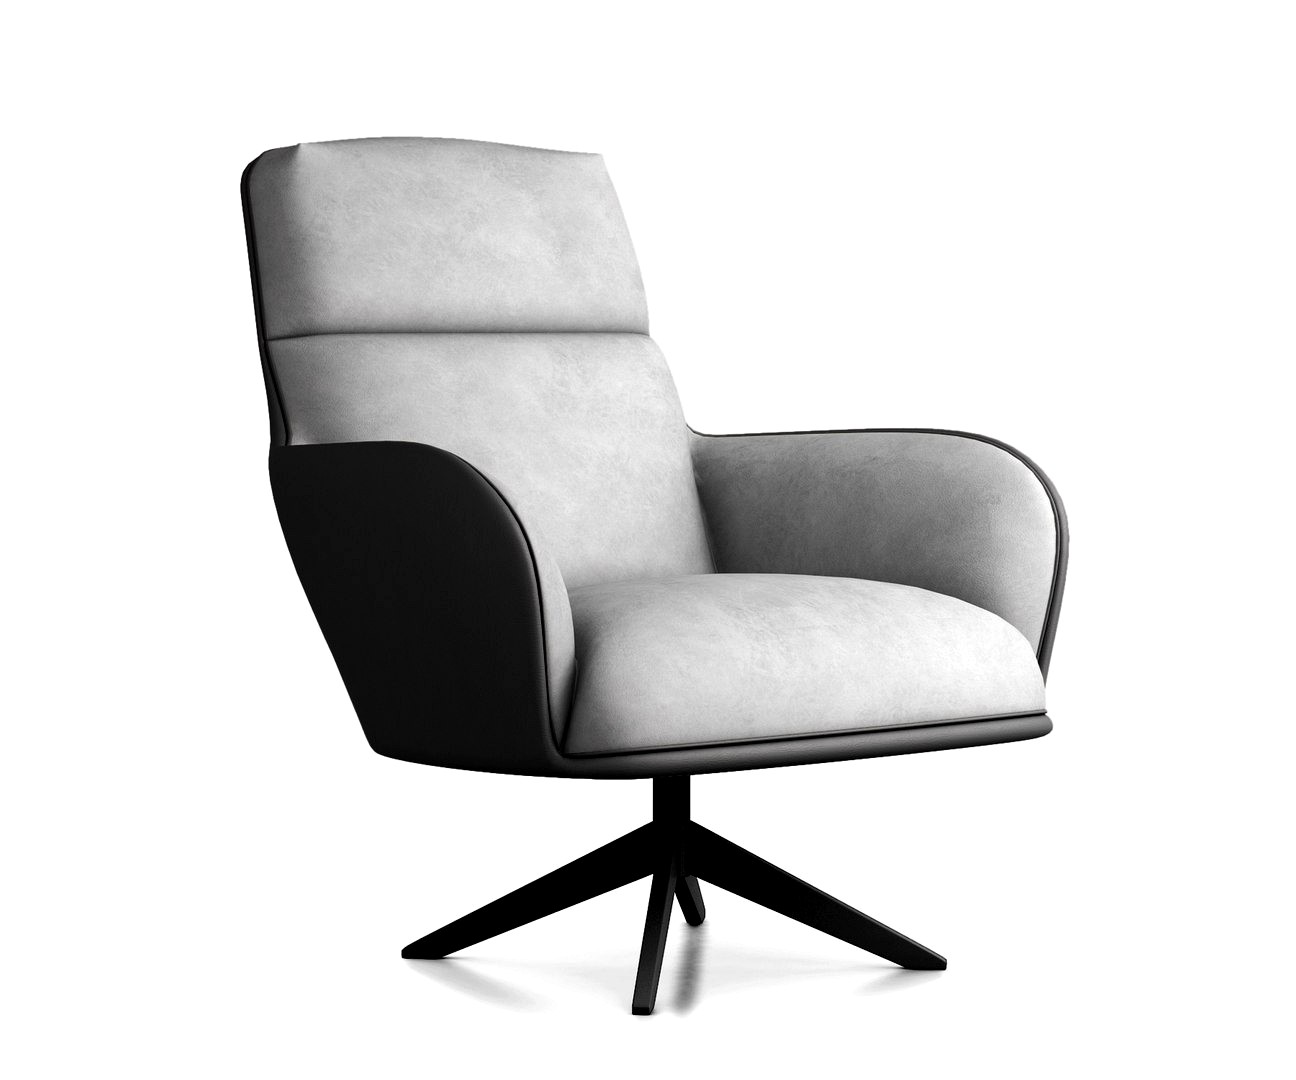 Christie Lounge Chair by Modloft